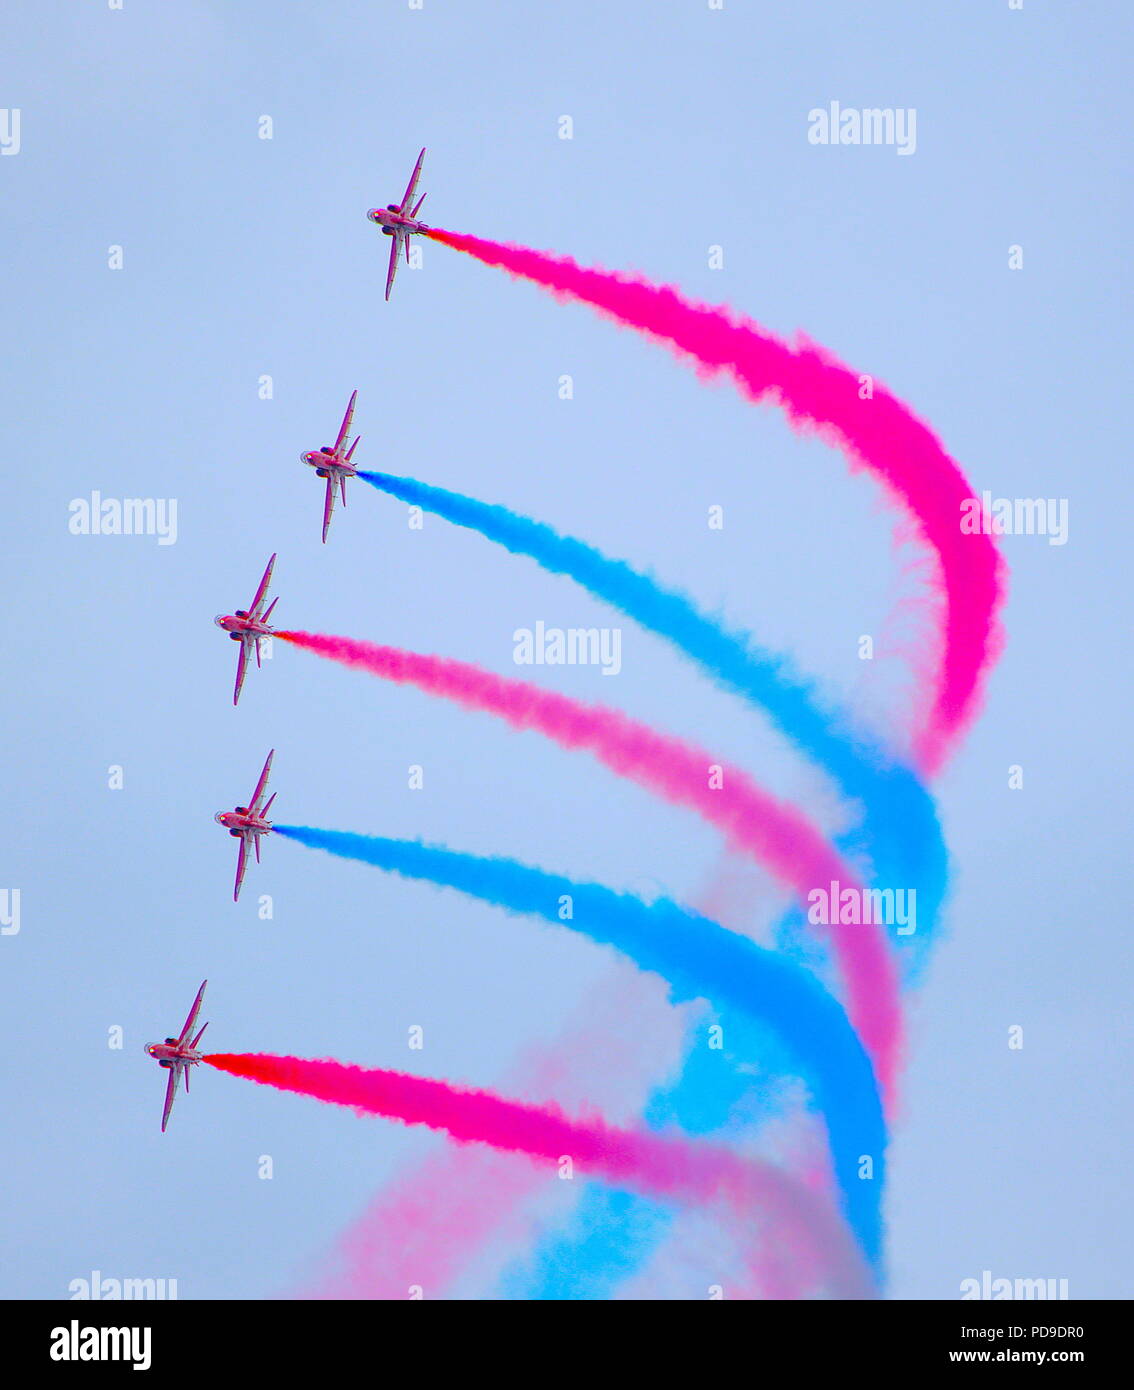 RAF Red Arrows Aerobatic Team Display Stock Photo